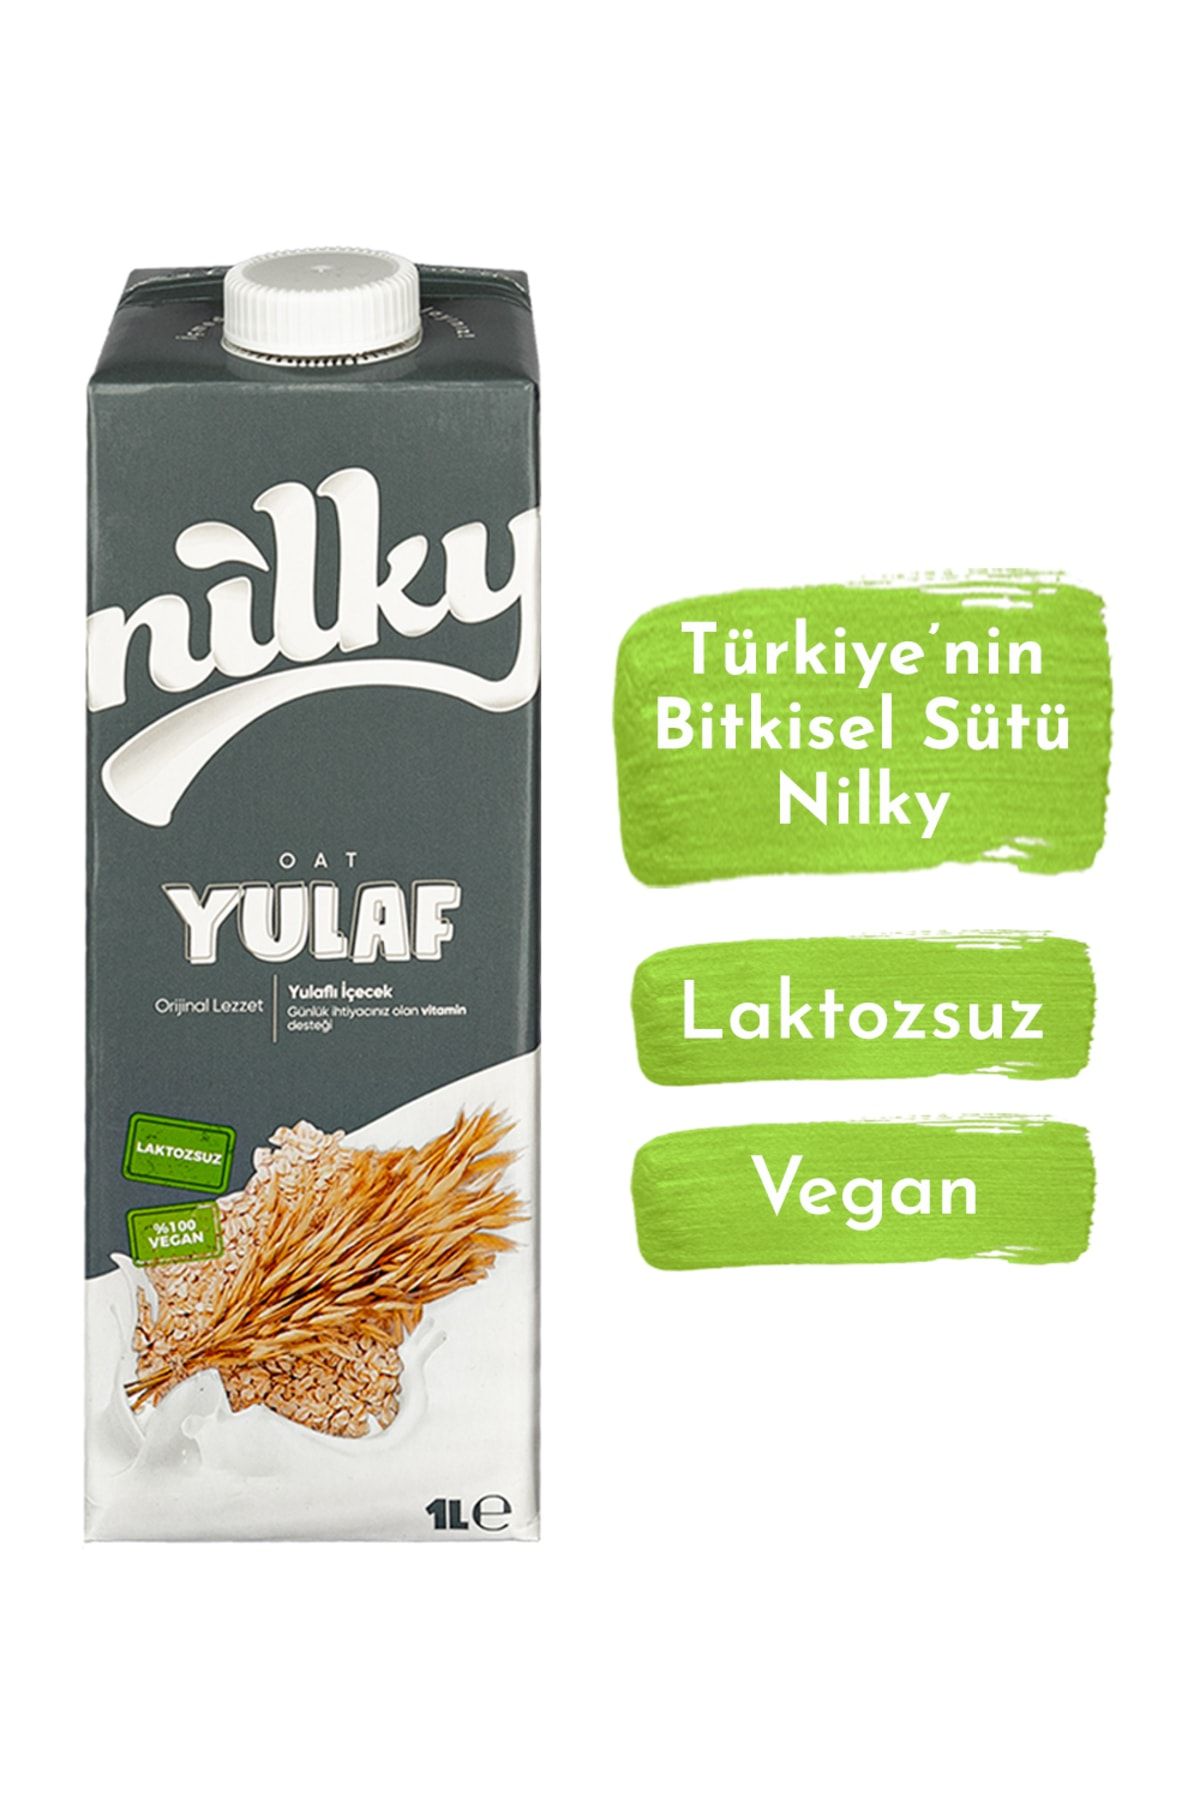 NİLKY Yulaf Sütü Bitkisel Bazlı Laktosuz Vegan 1 Lt